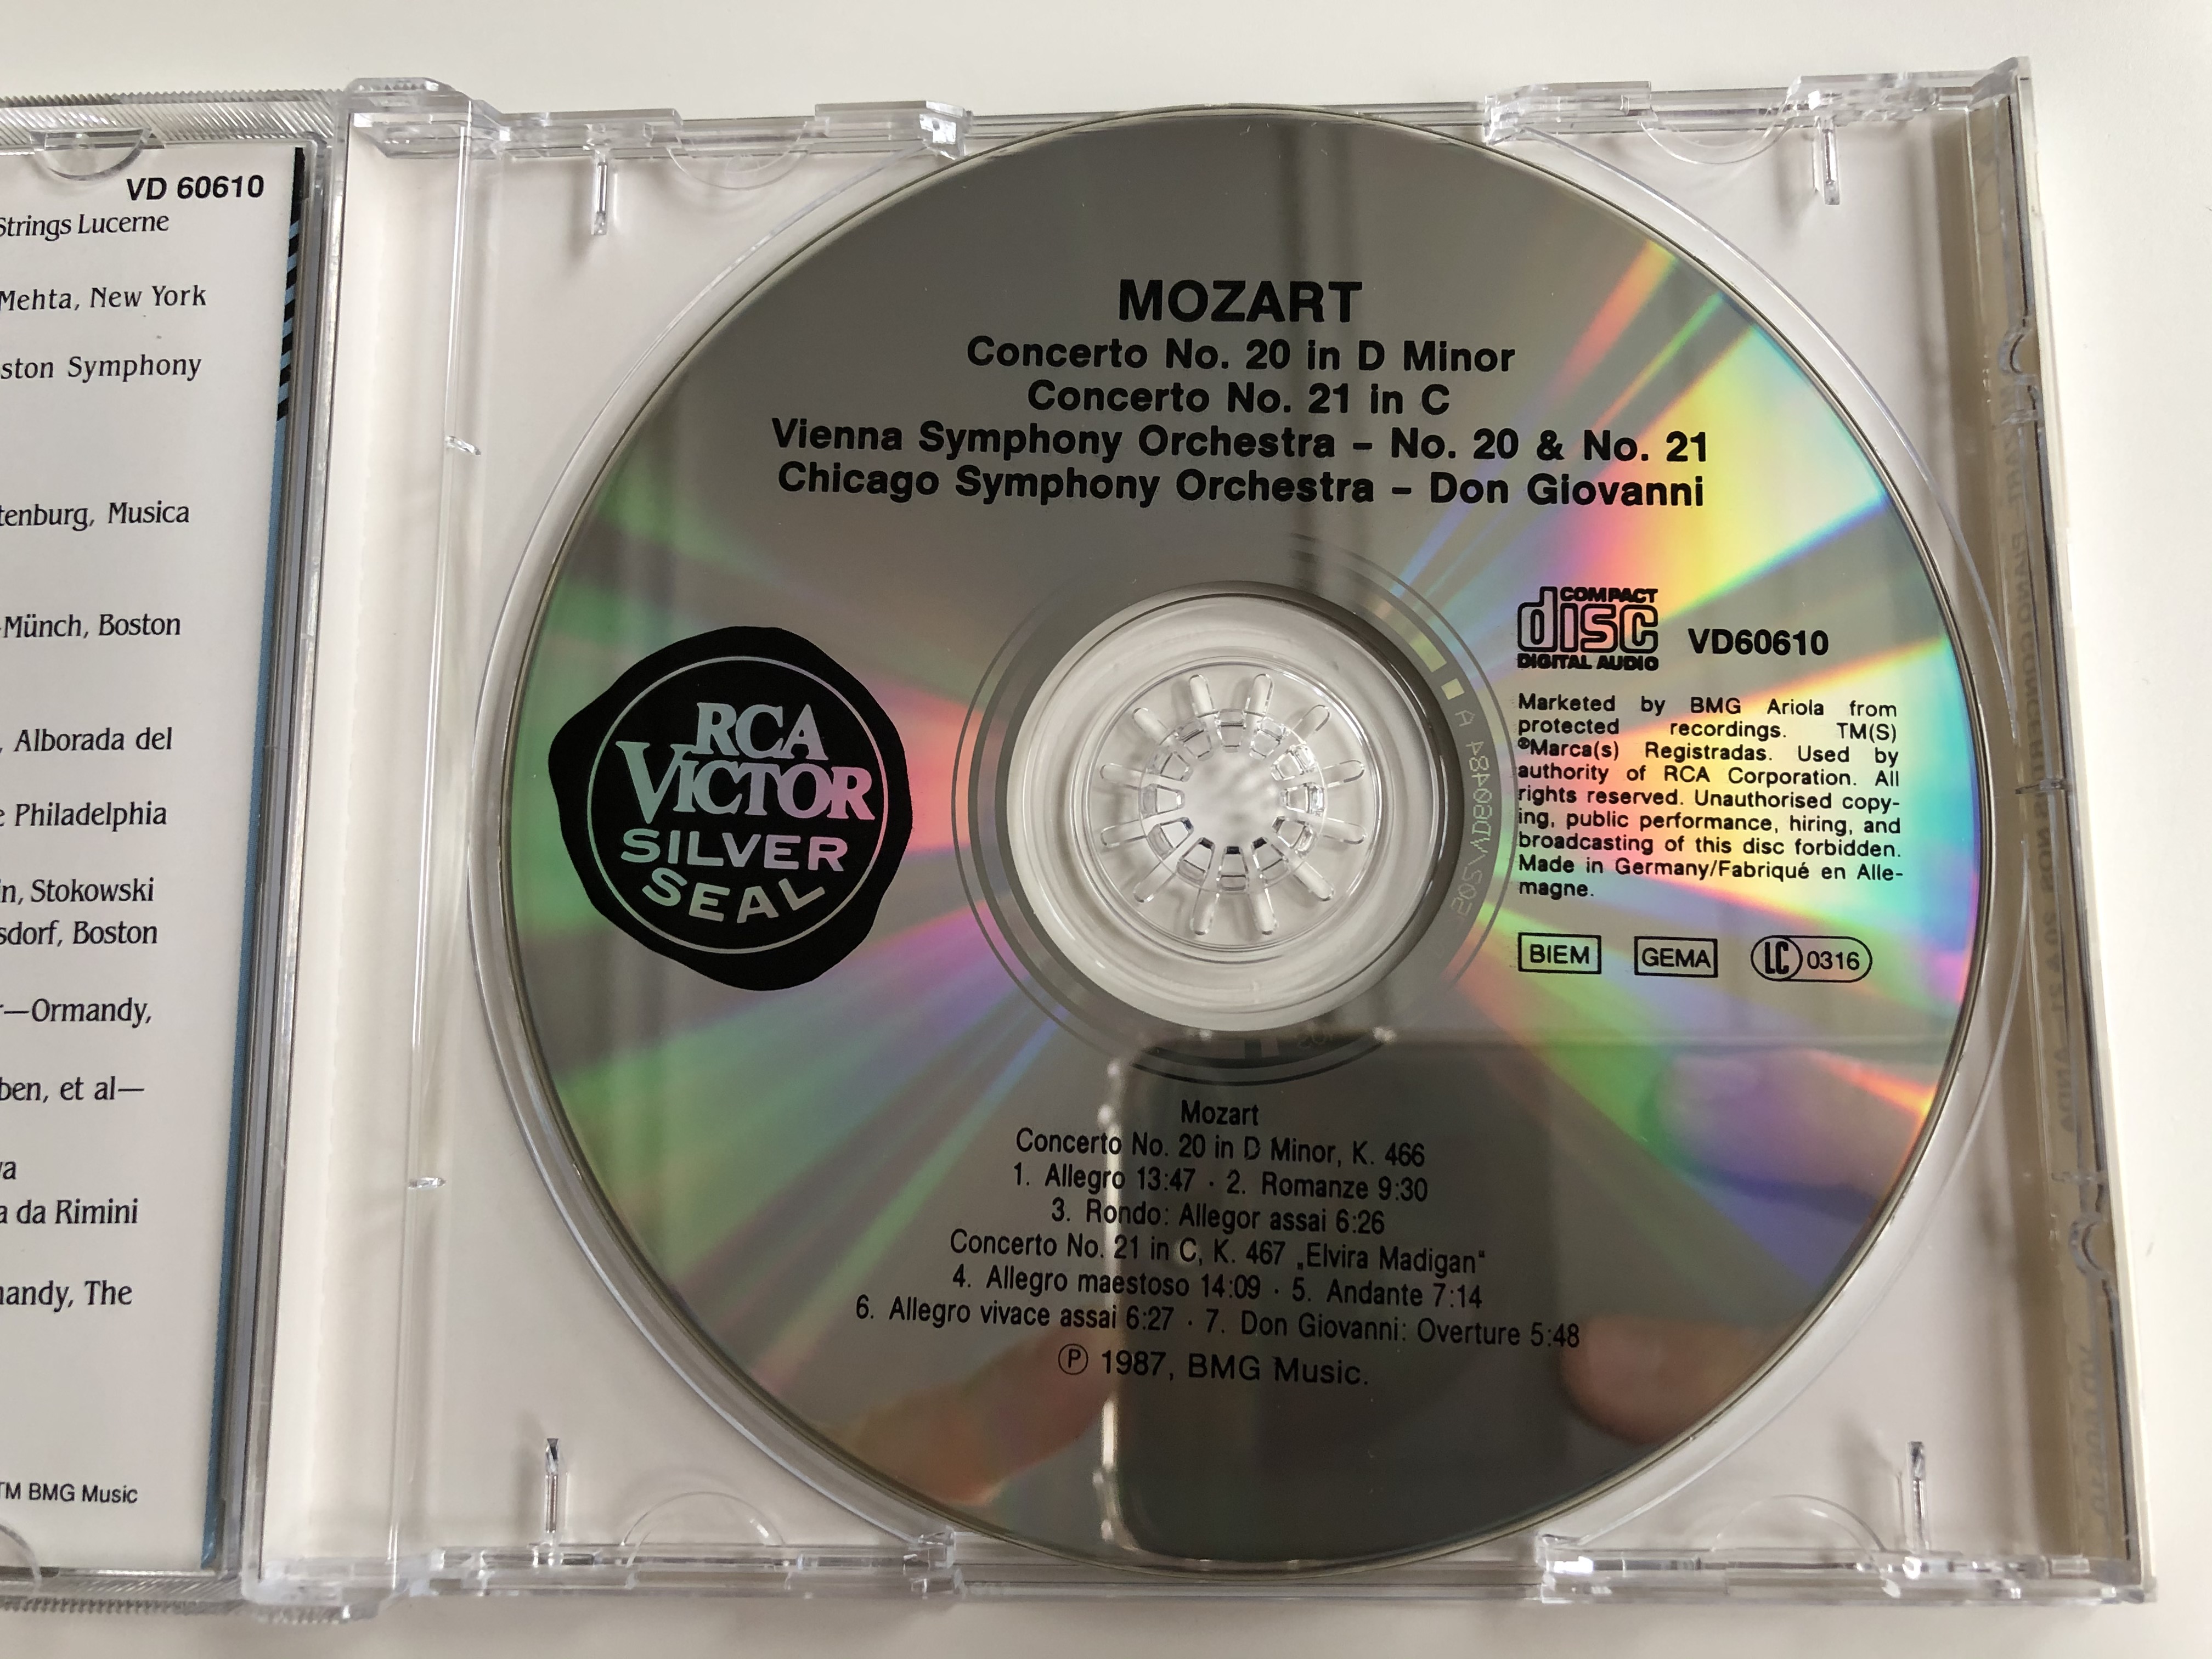 mozart-klavierkonzerte-nr.-20-nr.-21-ekvira-madigan-wiener-symphoniker-geza-anda-bmg-music-audio-cd-1987-vd-60610-2-.jpg